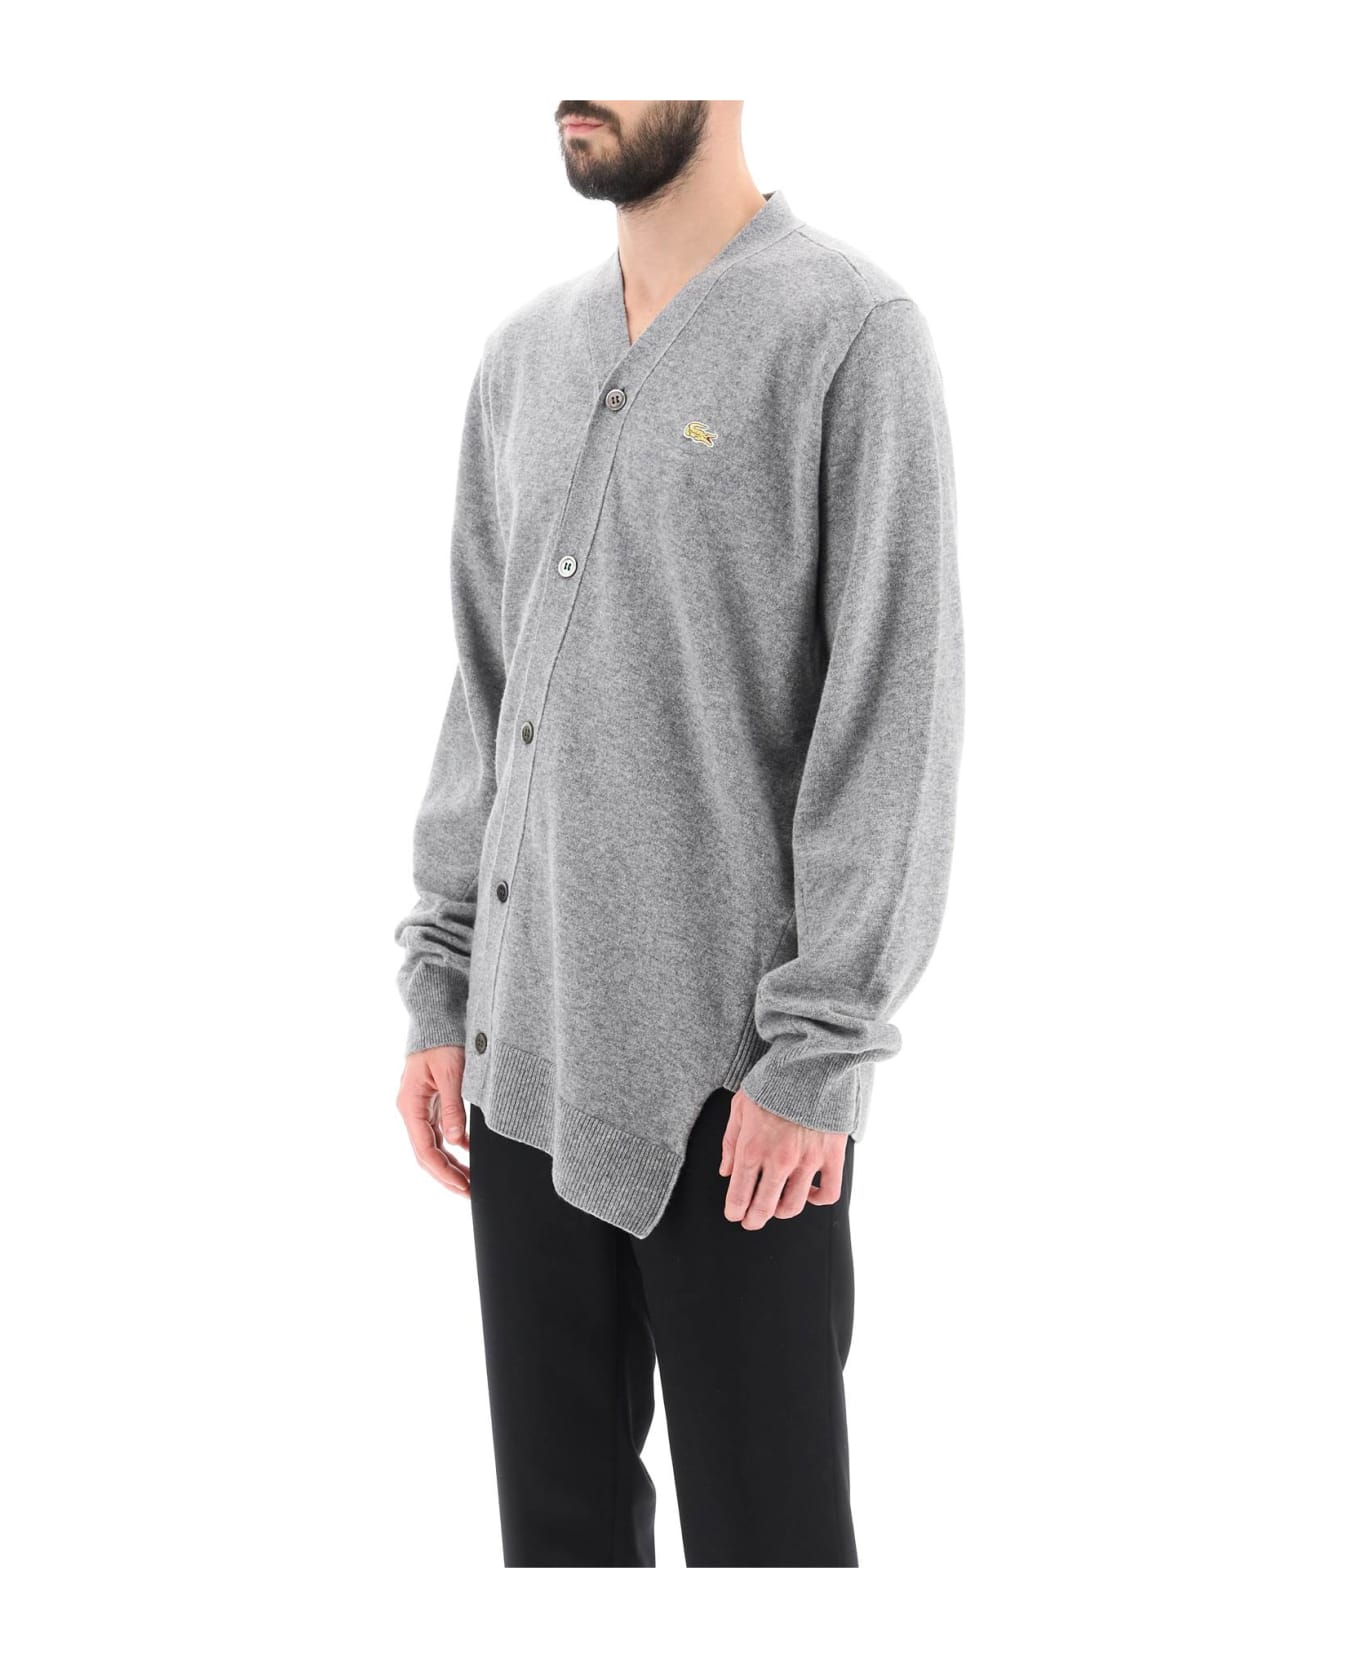 Comme des Garçons Shirt Lacoste Asymmetric Wool Cardigan - GREY (Grey)